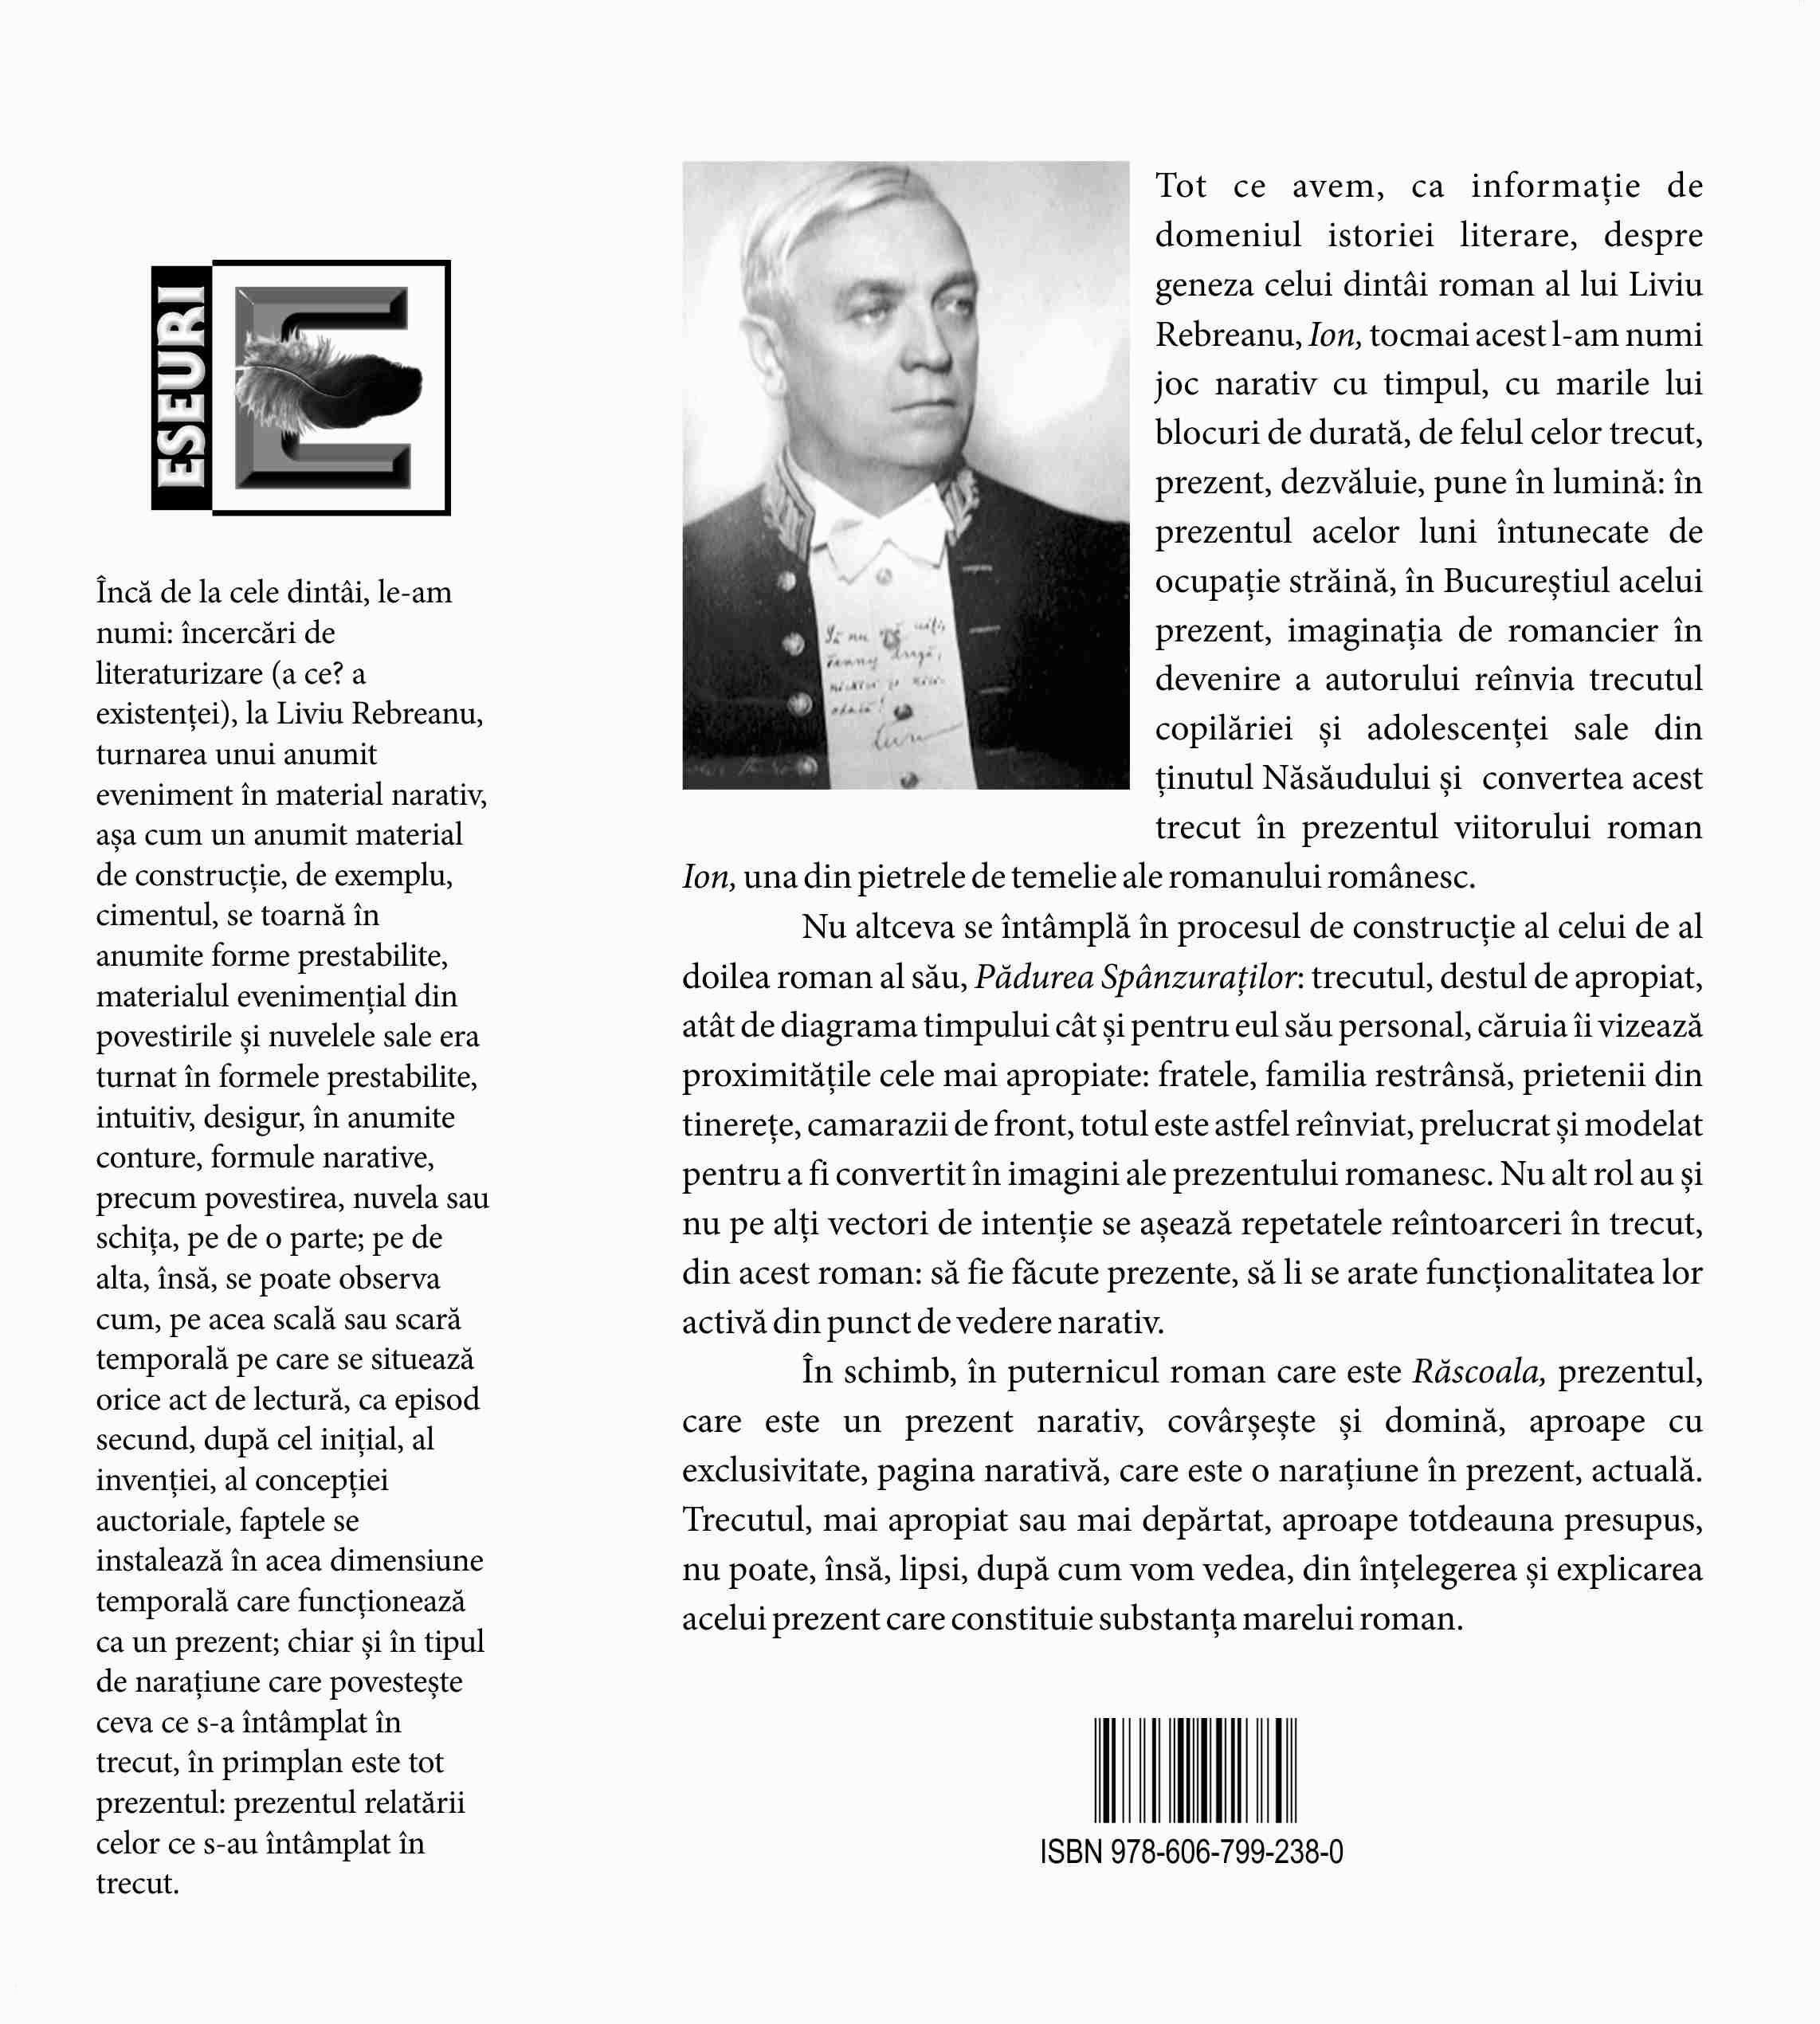 Liviu Rebreanu - Cele trei mari romane | Mircea Tomus